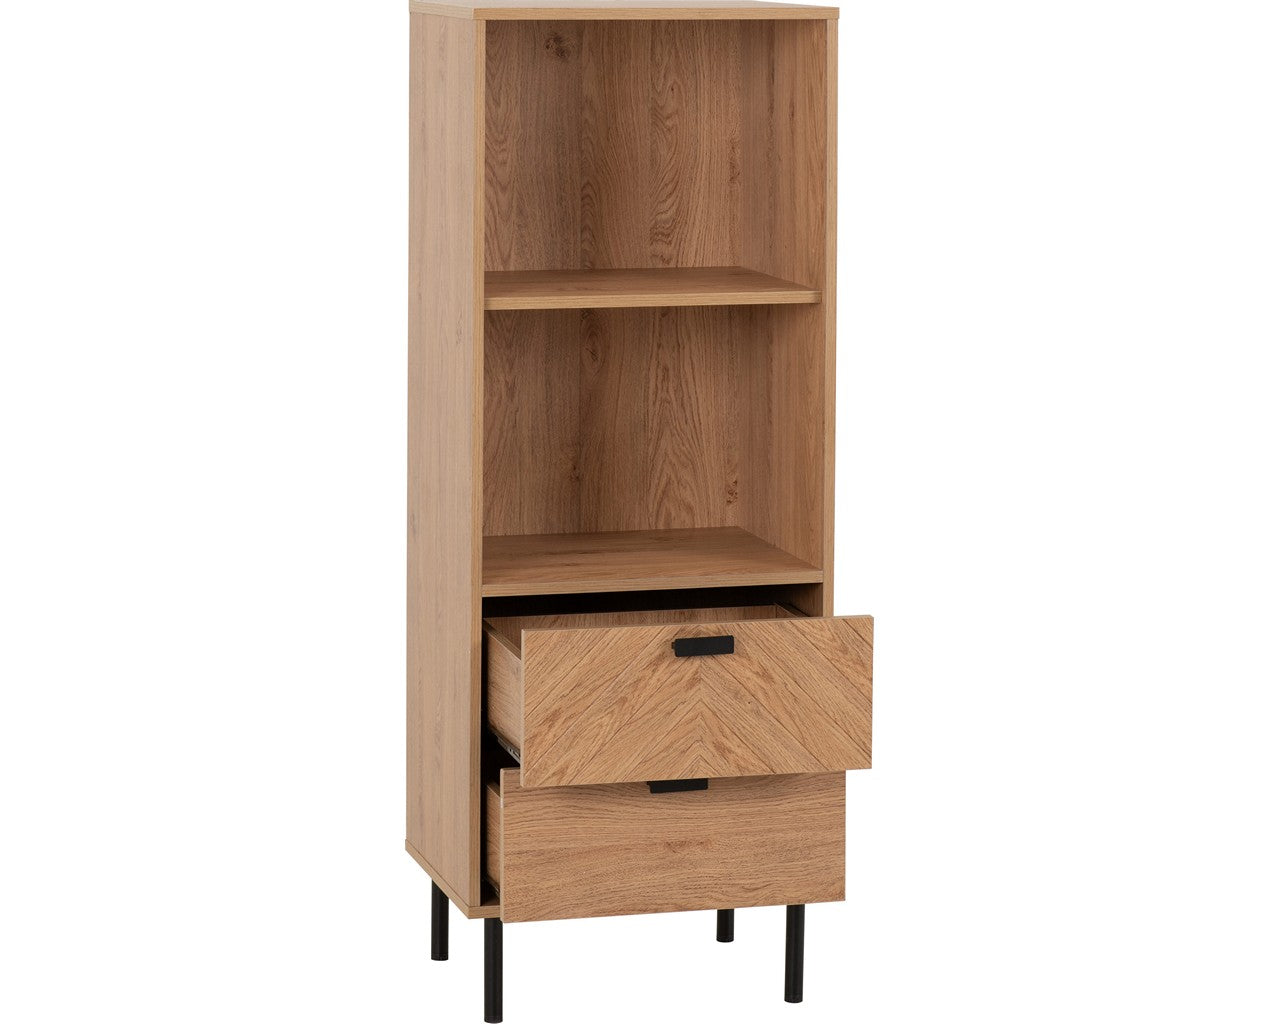 Leon Range - 2 Drawer 2 Shelf Cabinet